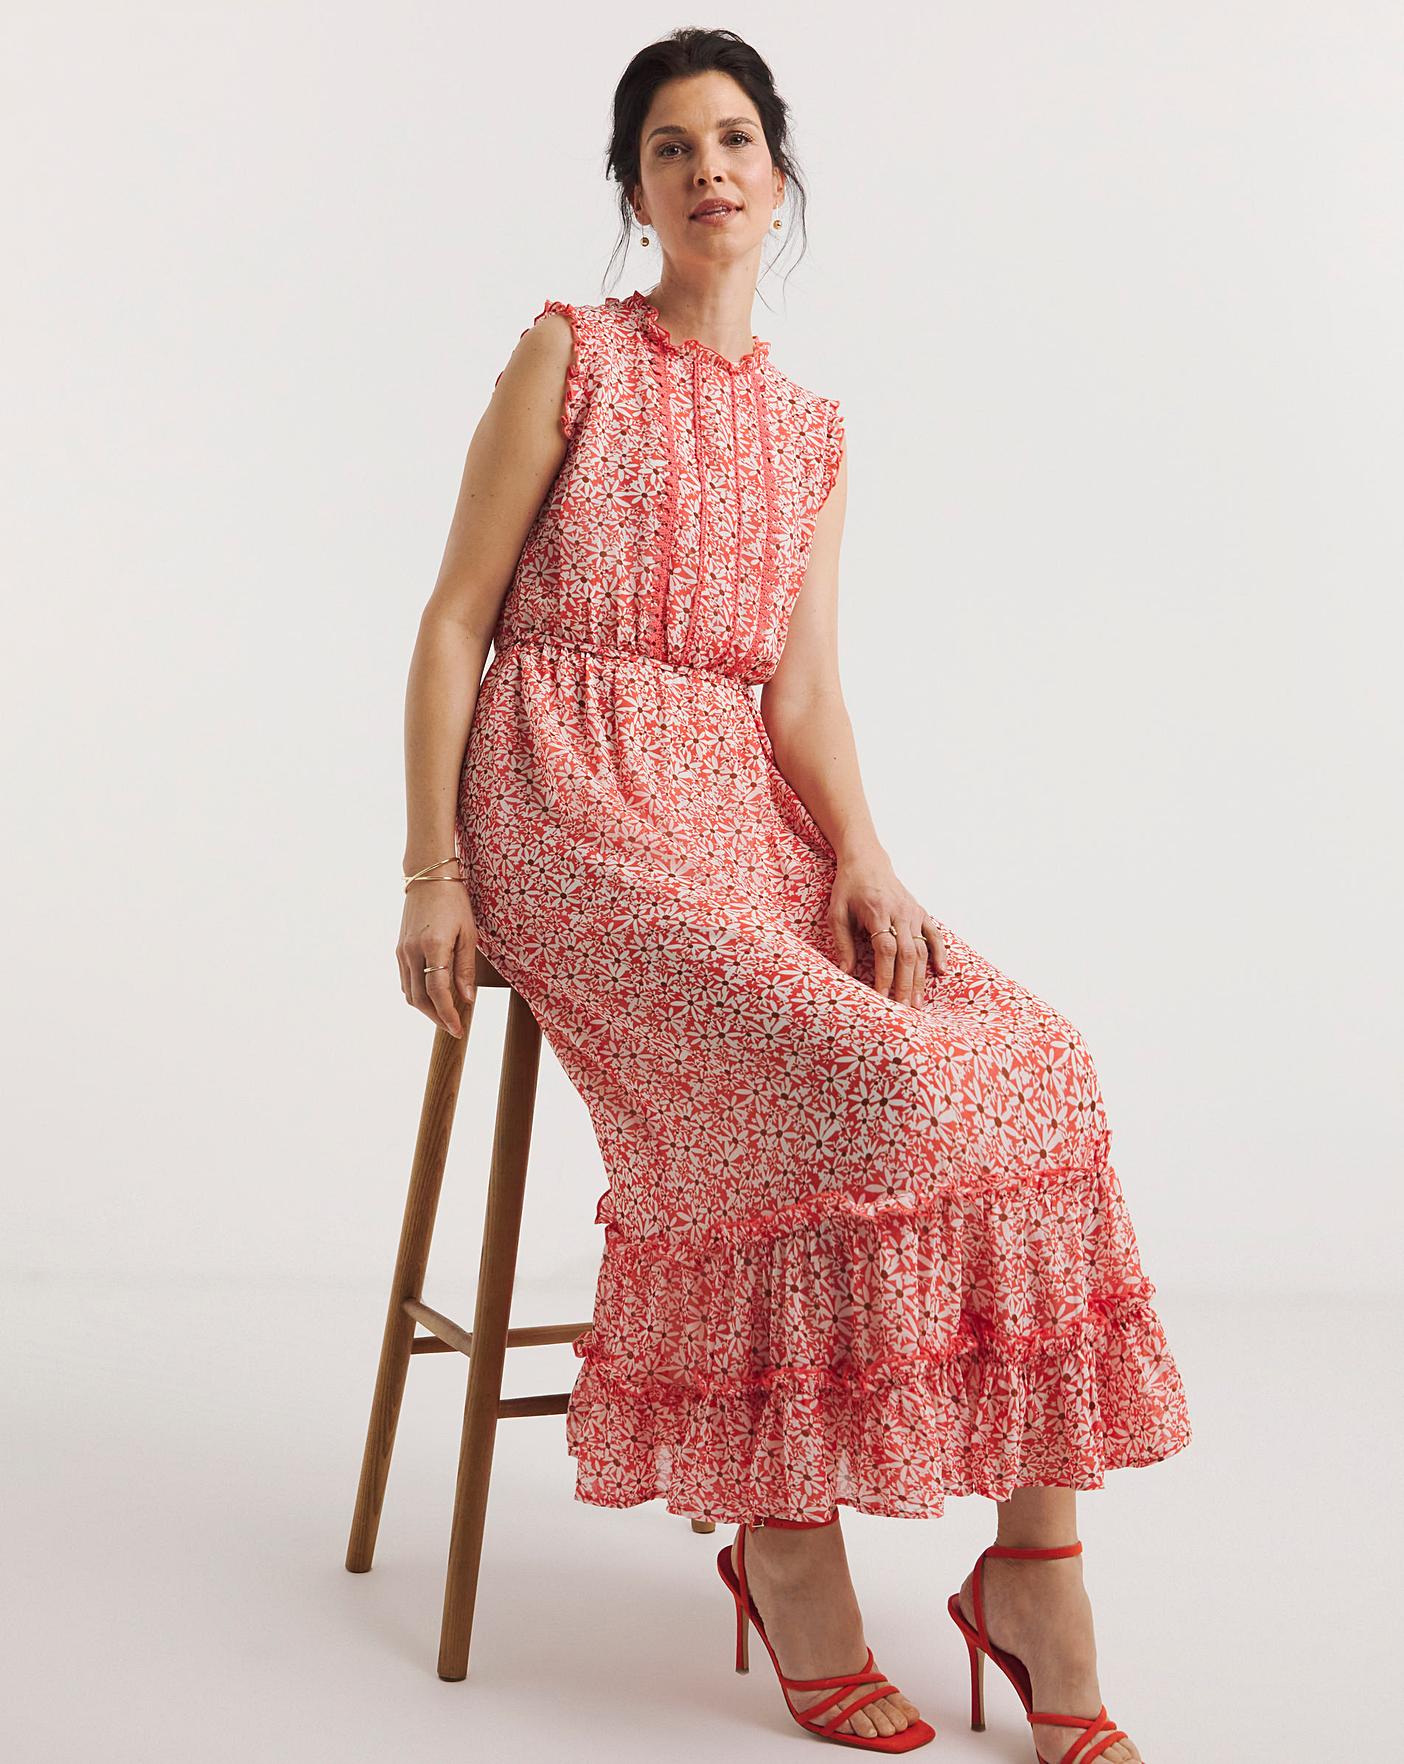 Georgette Dress With Lace Trim | Fashion World